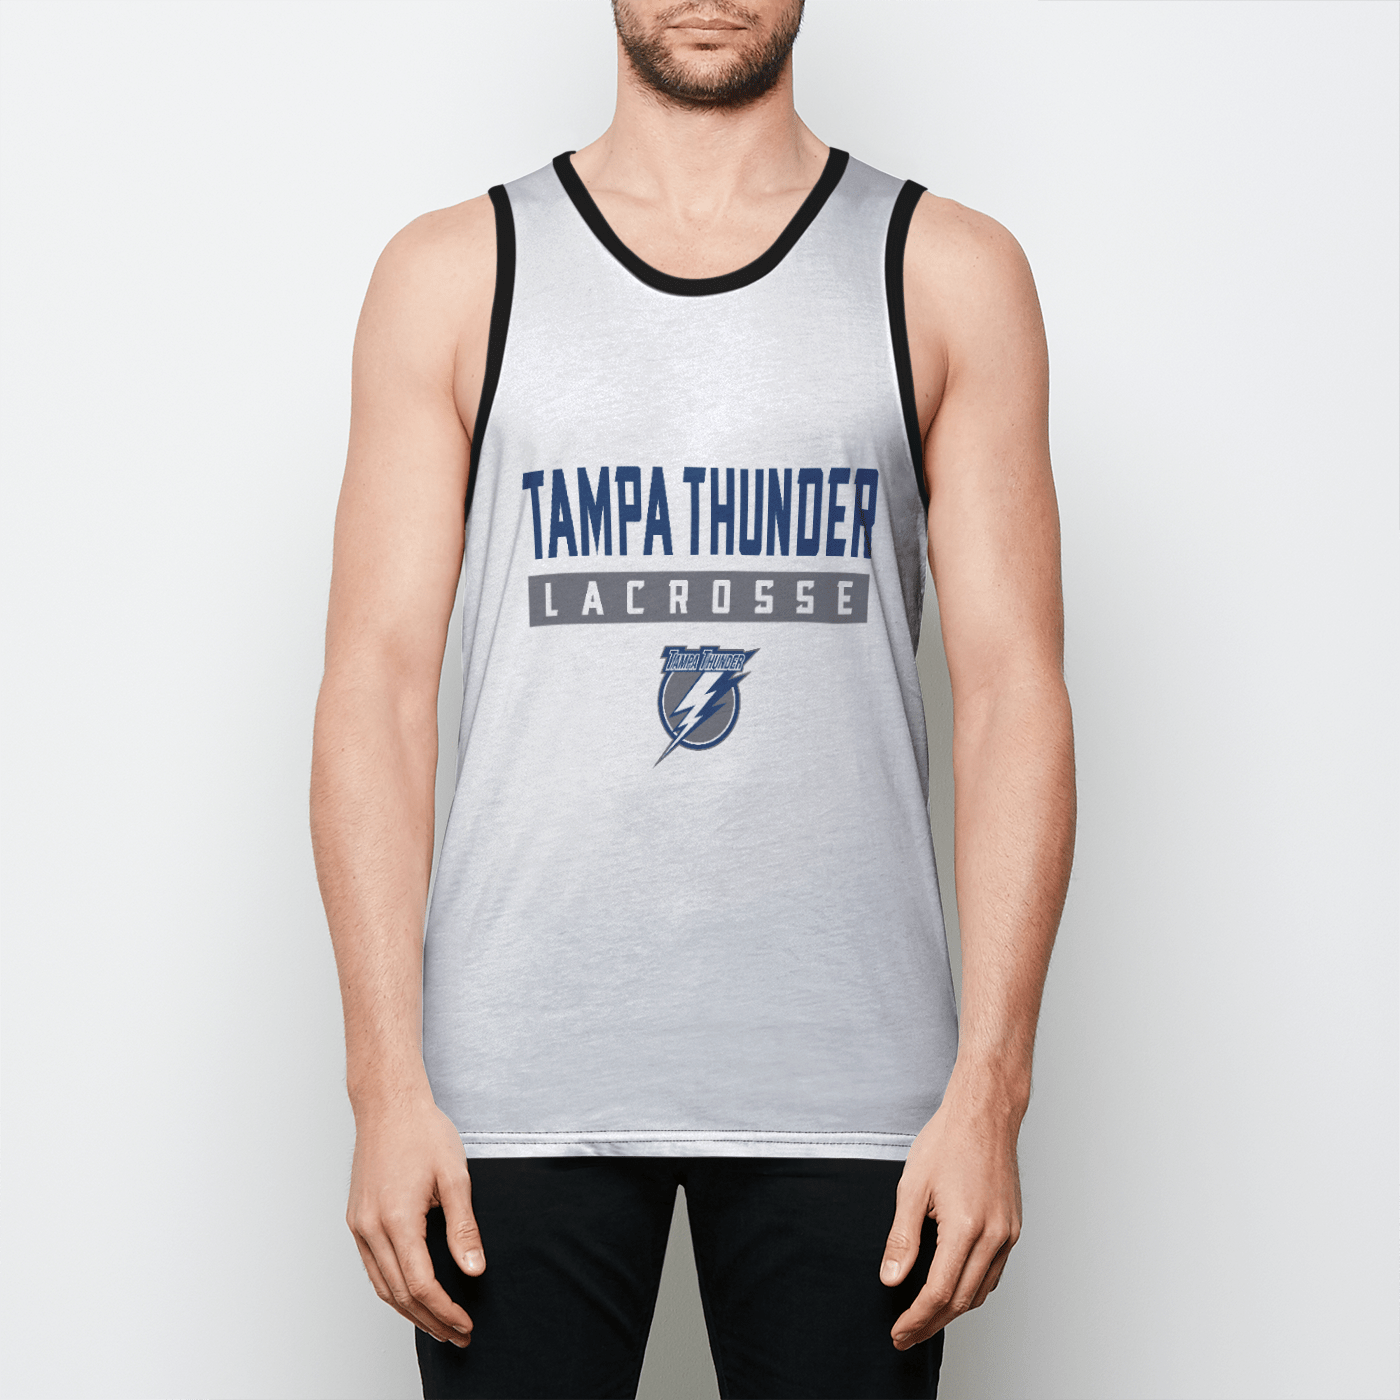 Tampa Thunder Lacrosse Adult Men's Tank Top Signature Lacrosse